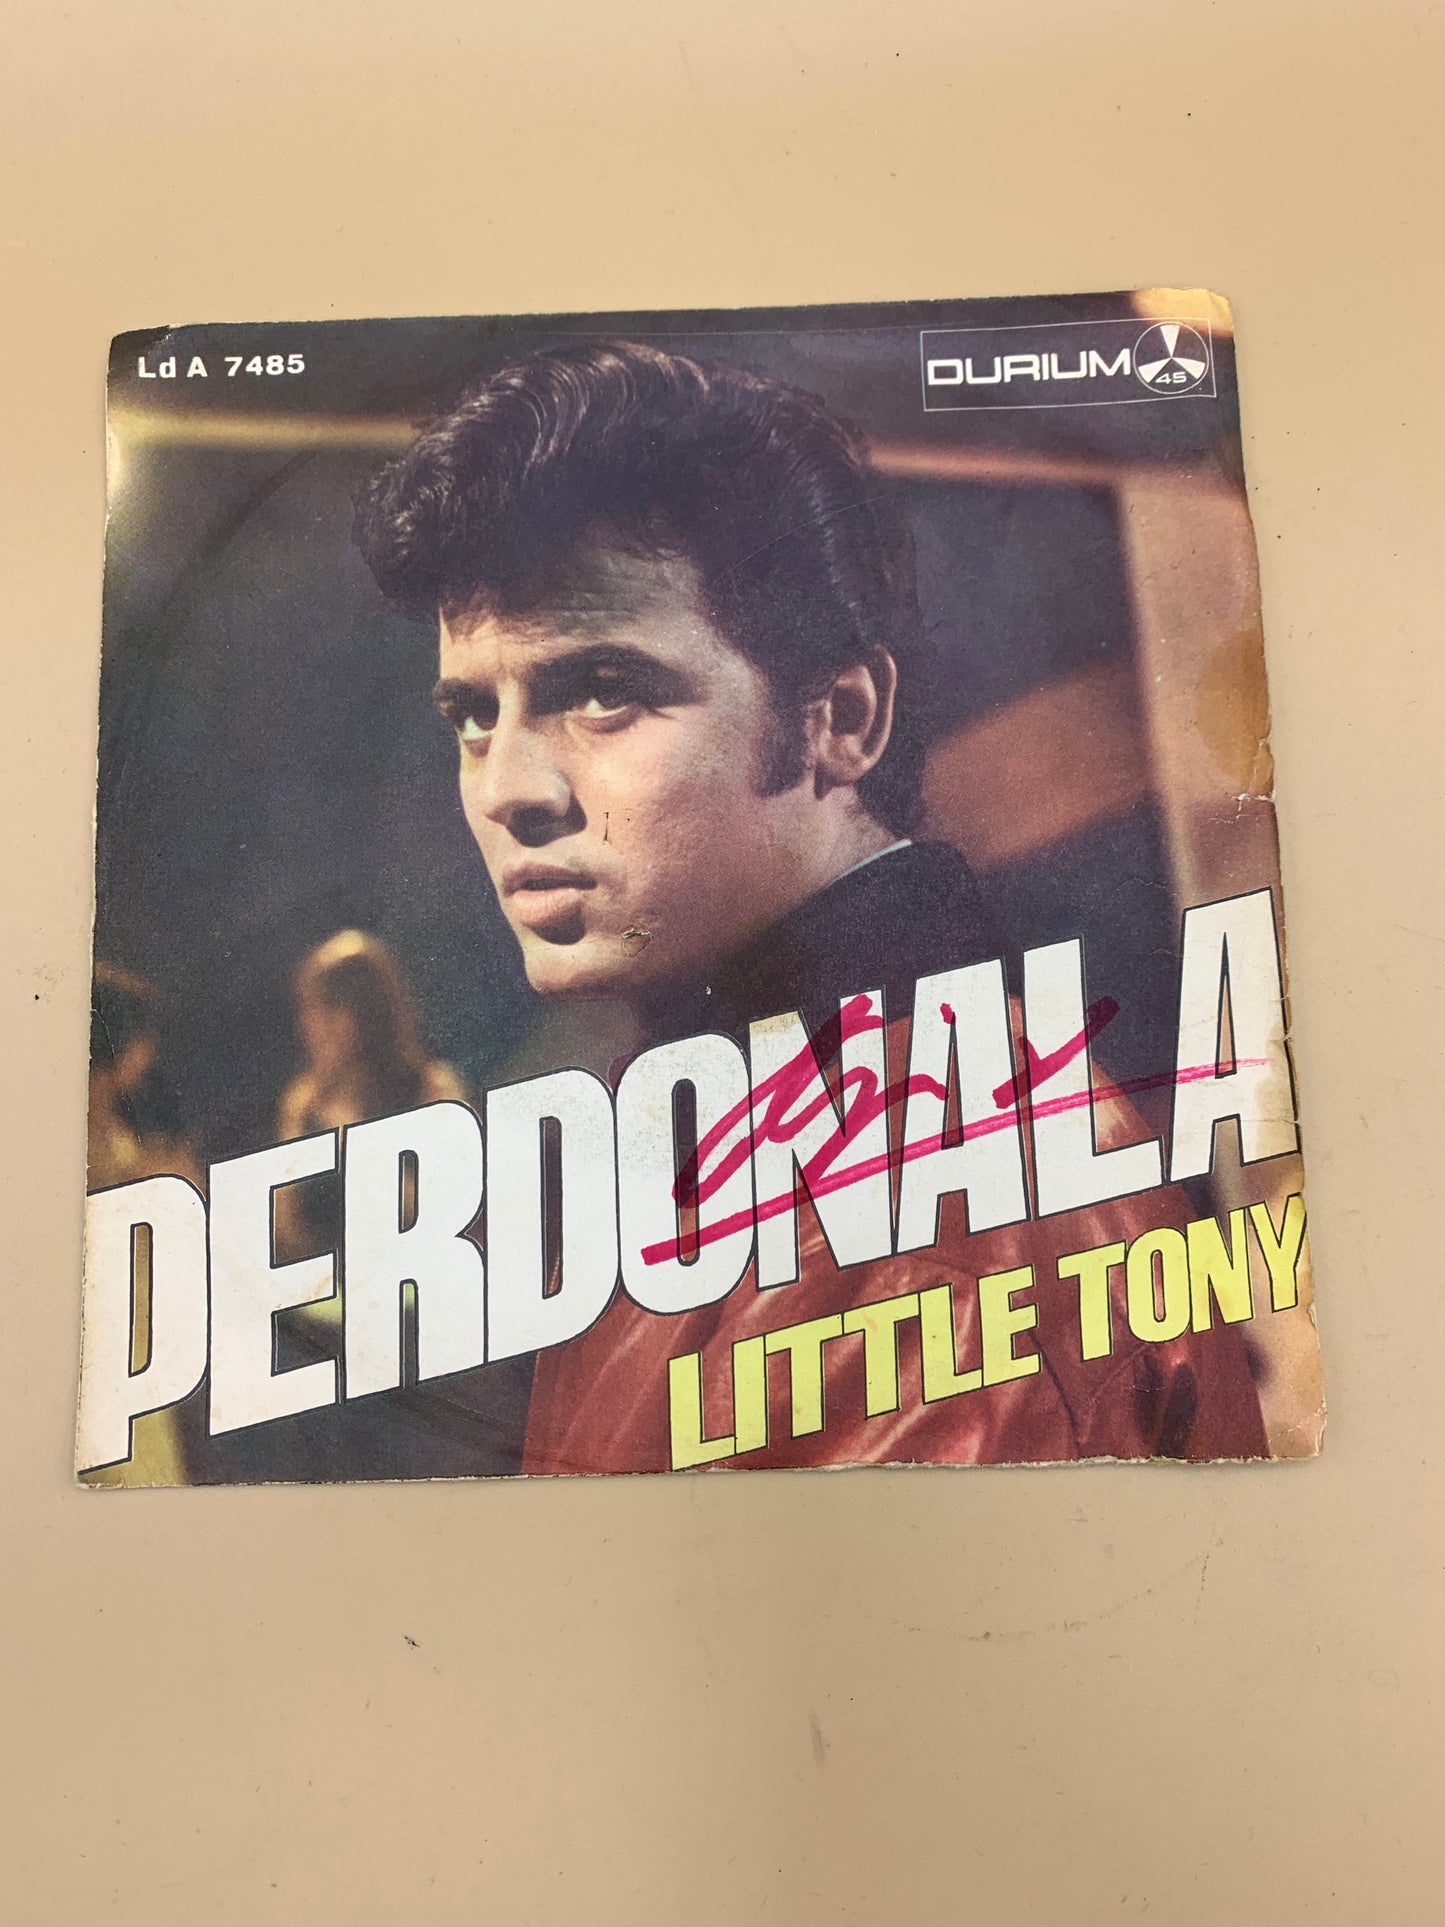 Little Tony - Forgive Her - 45 rpm vinyl record